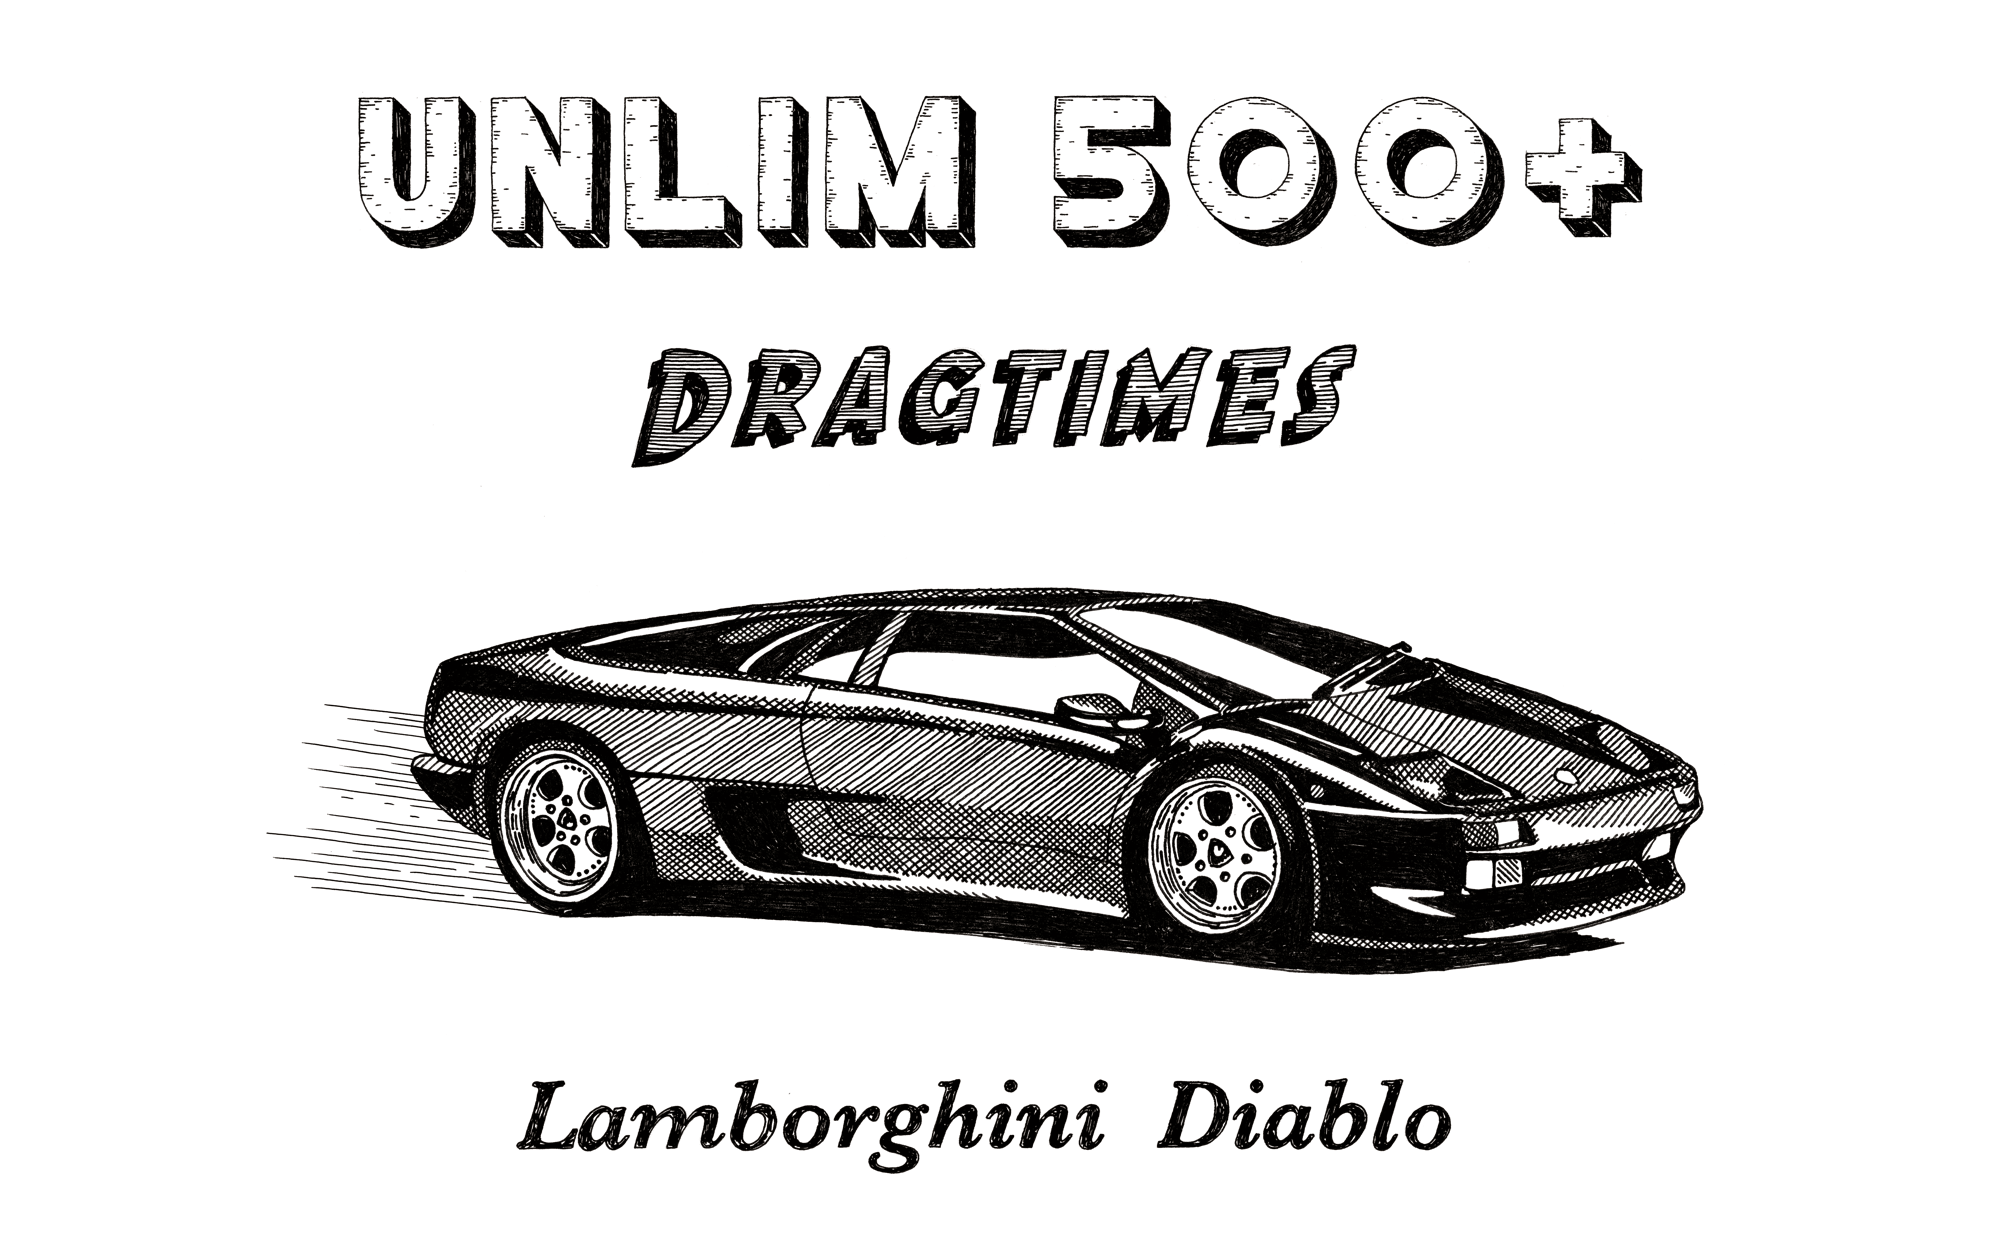 Lamborghini Diablo illustration